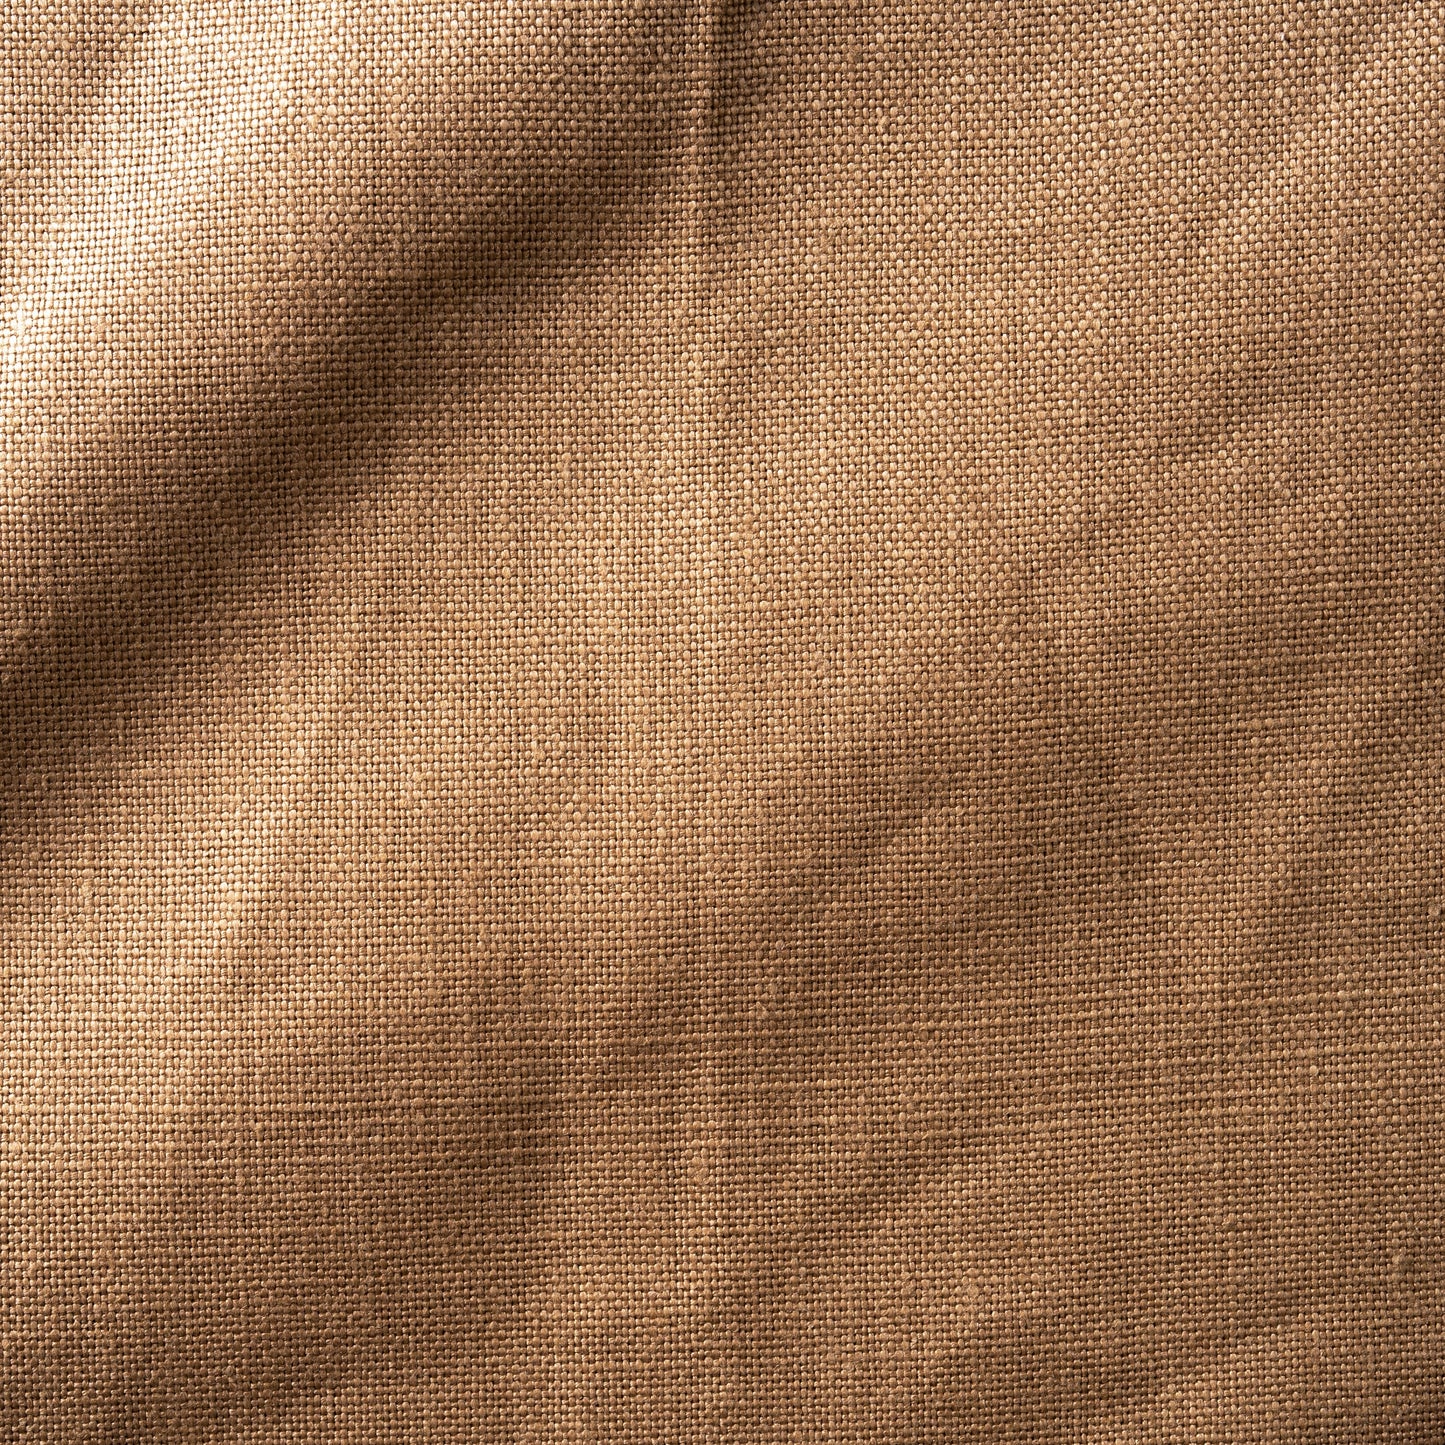 12 oz/sq yard 100% Upholstery/ Slipcover Weight Linen in Hazelnut Swatch